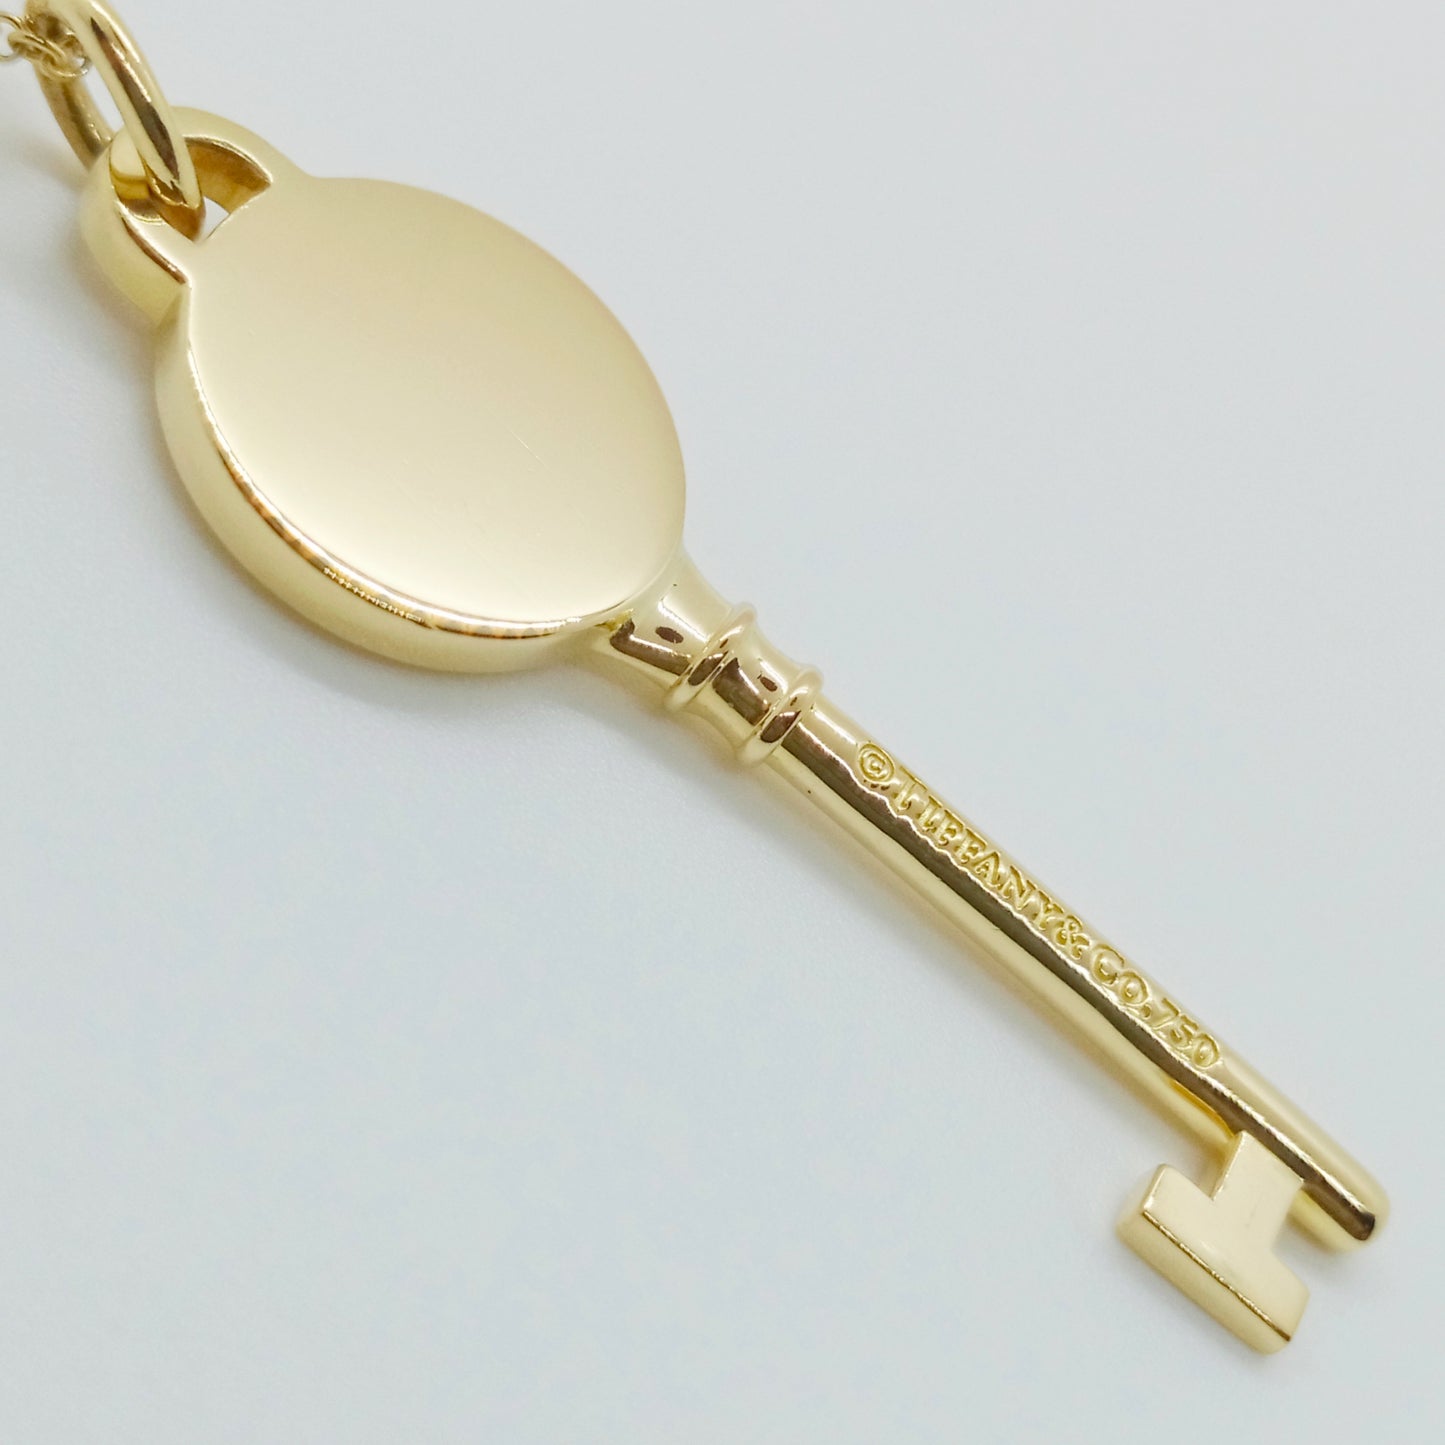 Tiffany & Co. Return to Tiffany Round Key Necklace